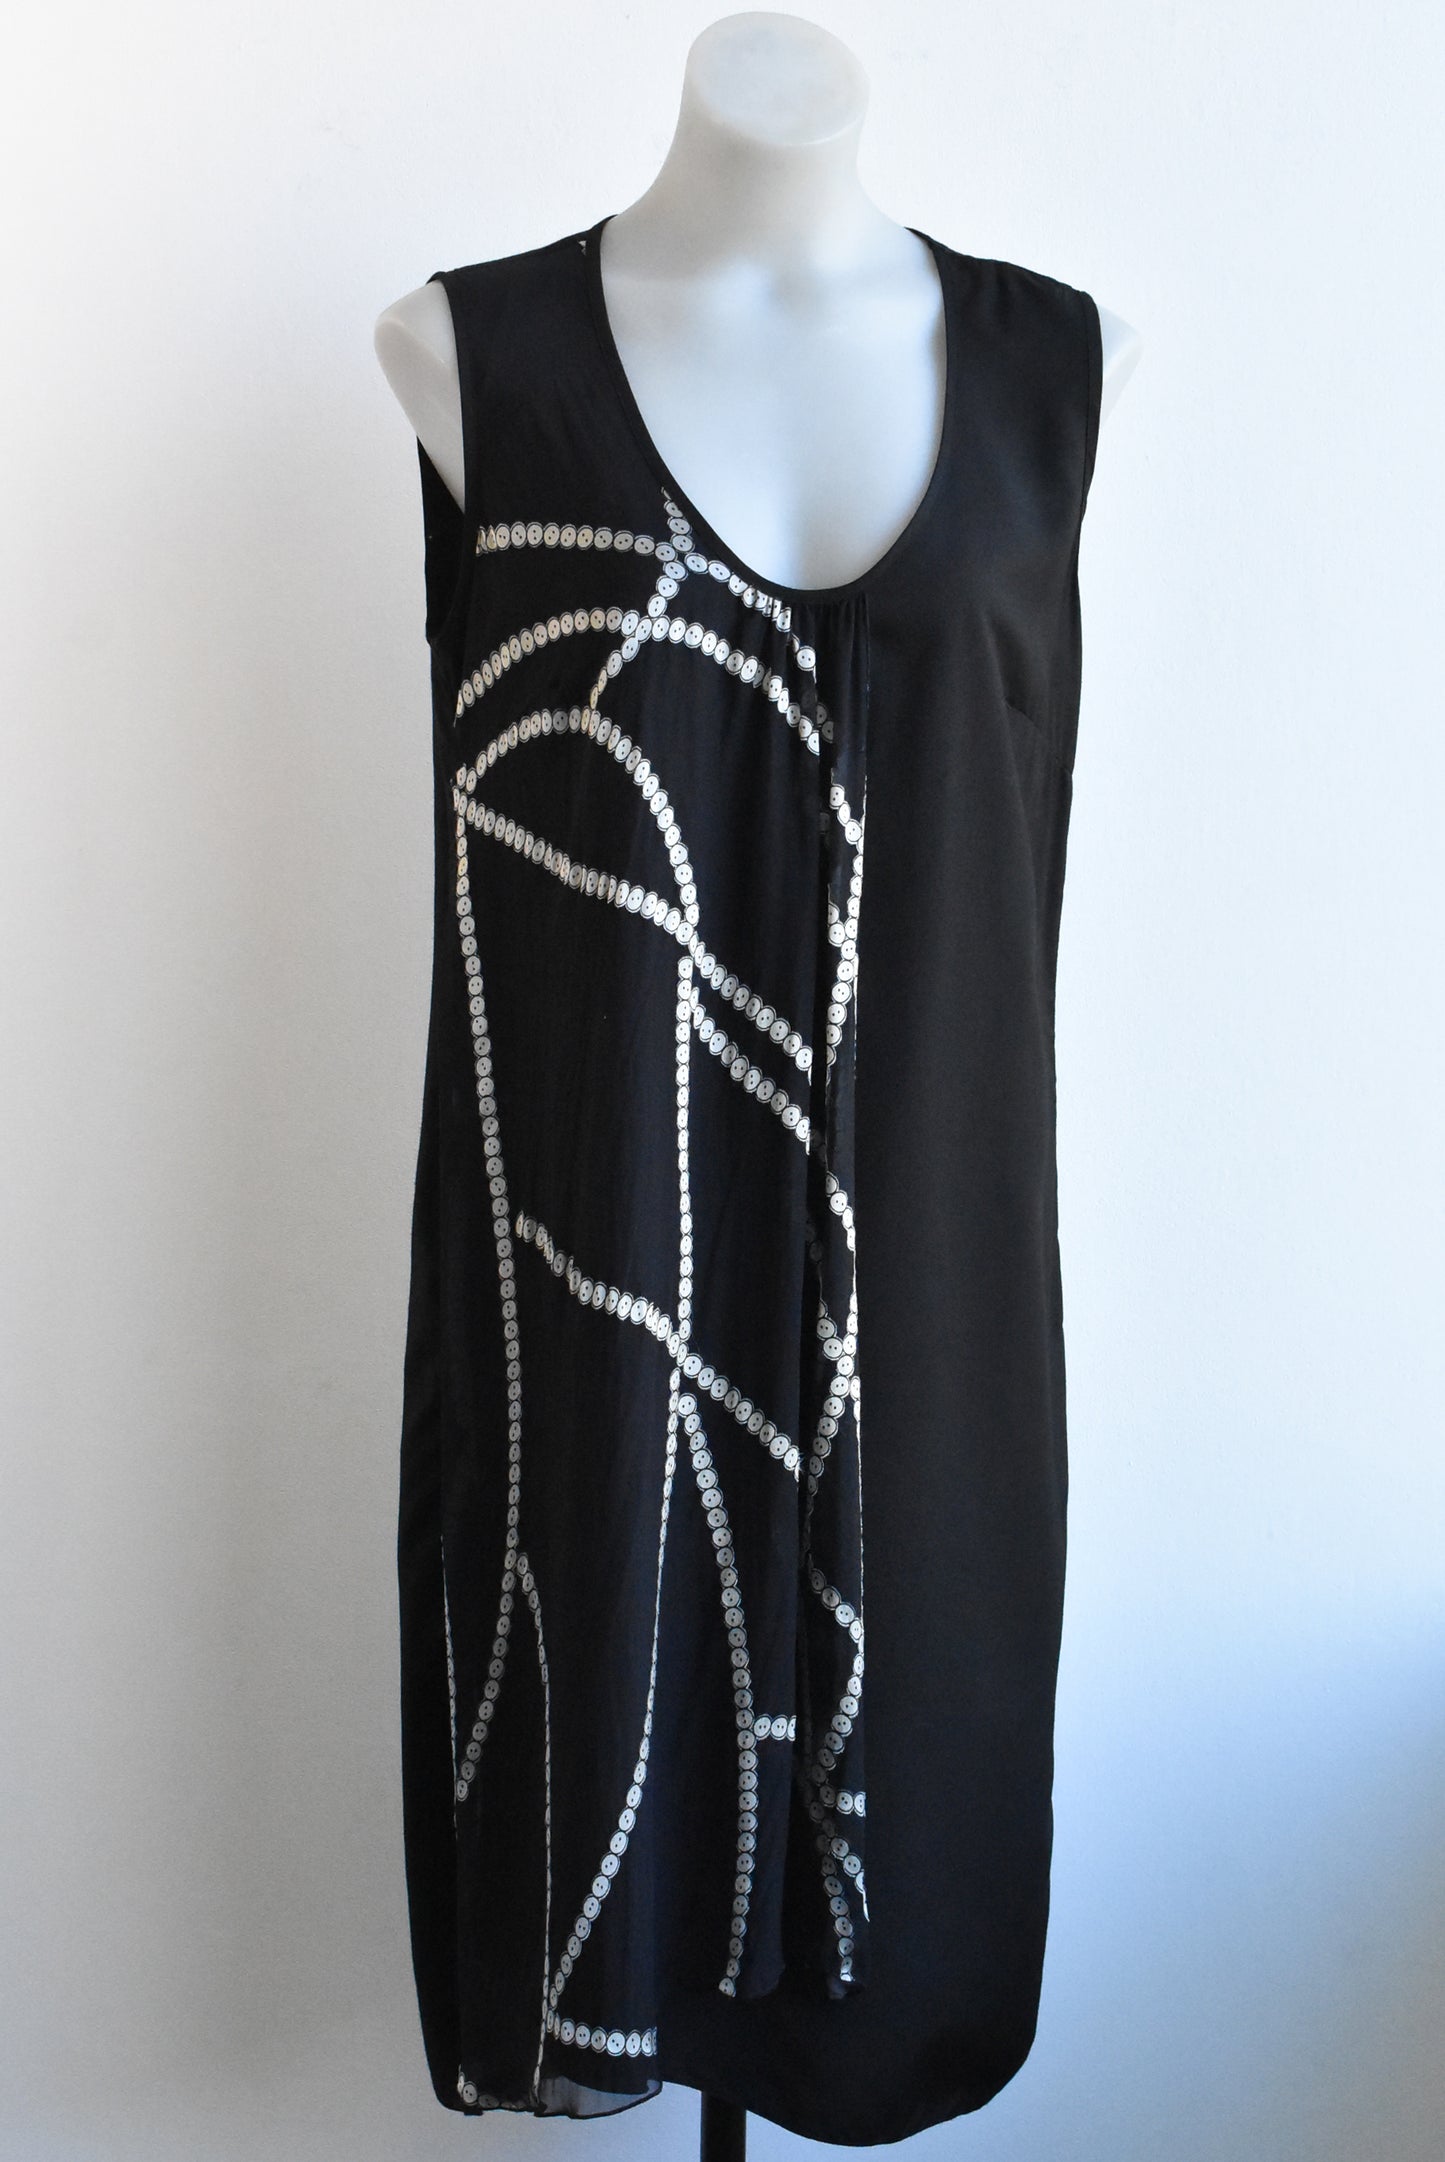 Obi New Zealand sleeveless black dress with silver button pattern, nz design, size 10